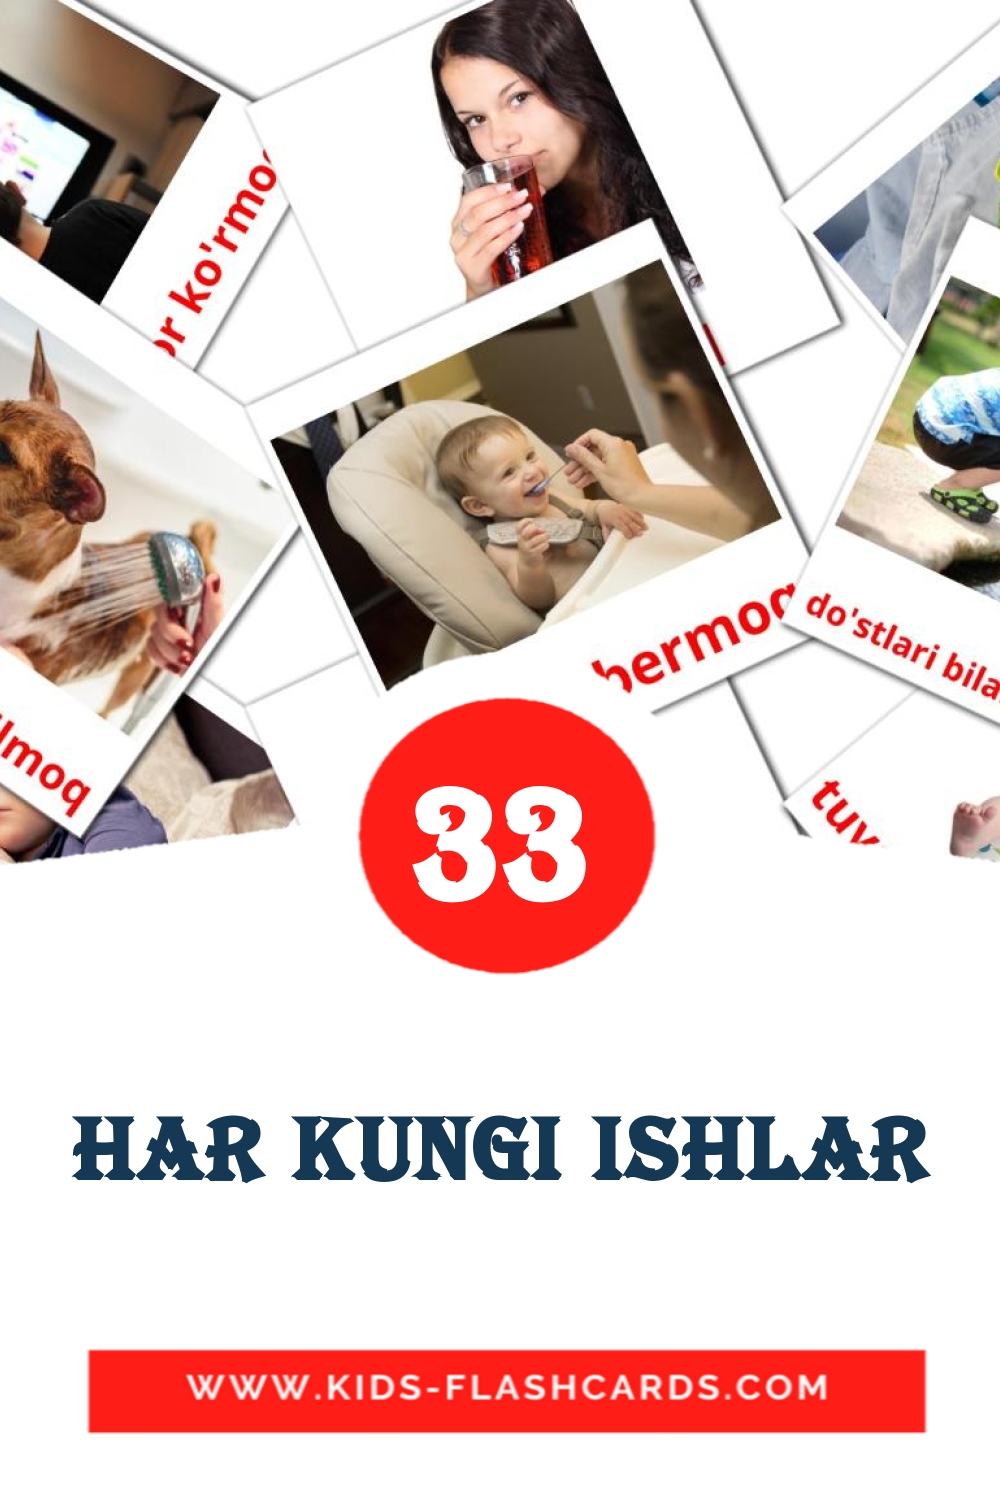 33 Har kungi ishlar Picture Cards for Kindergarden in uzbek